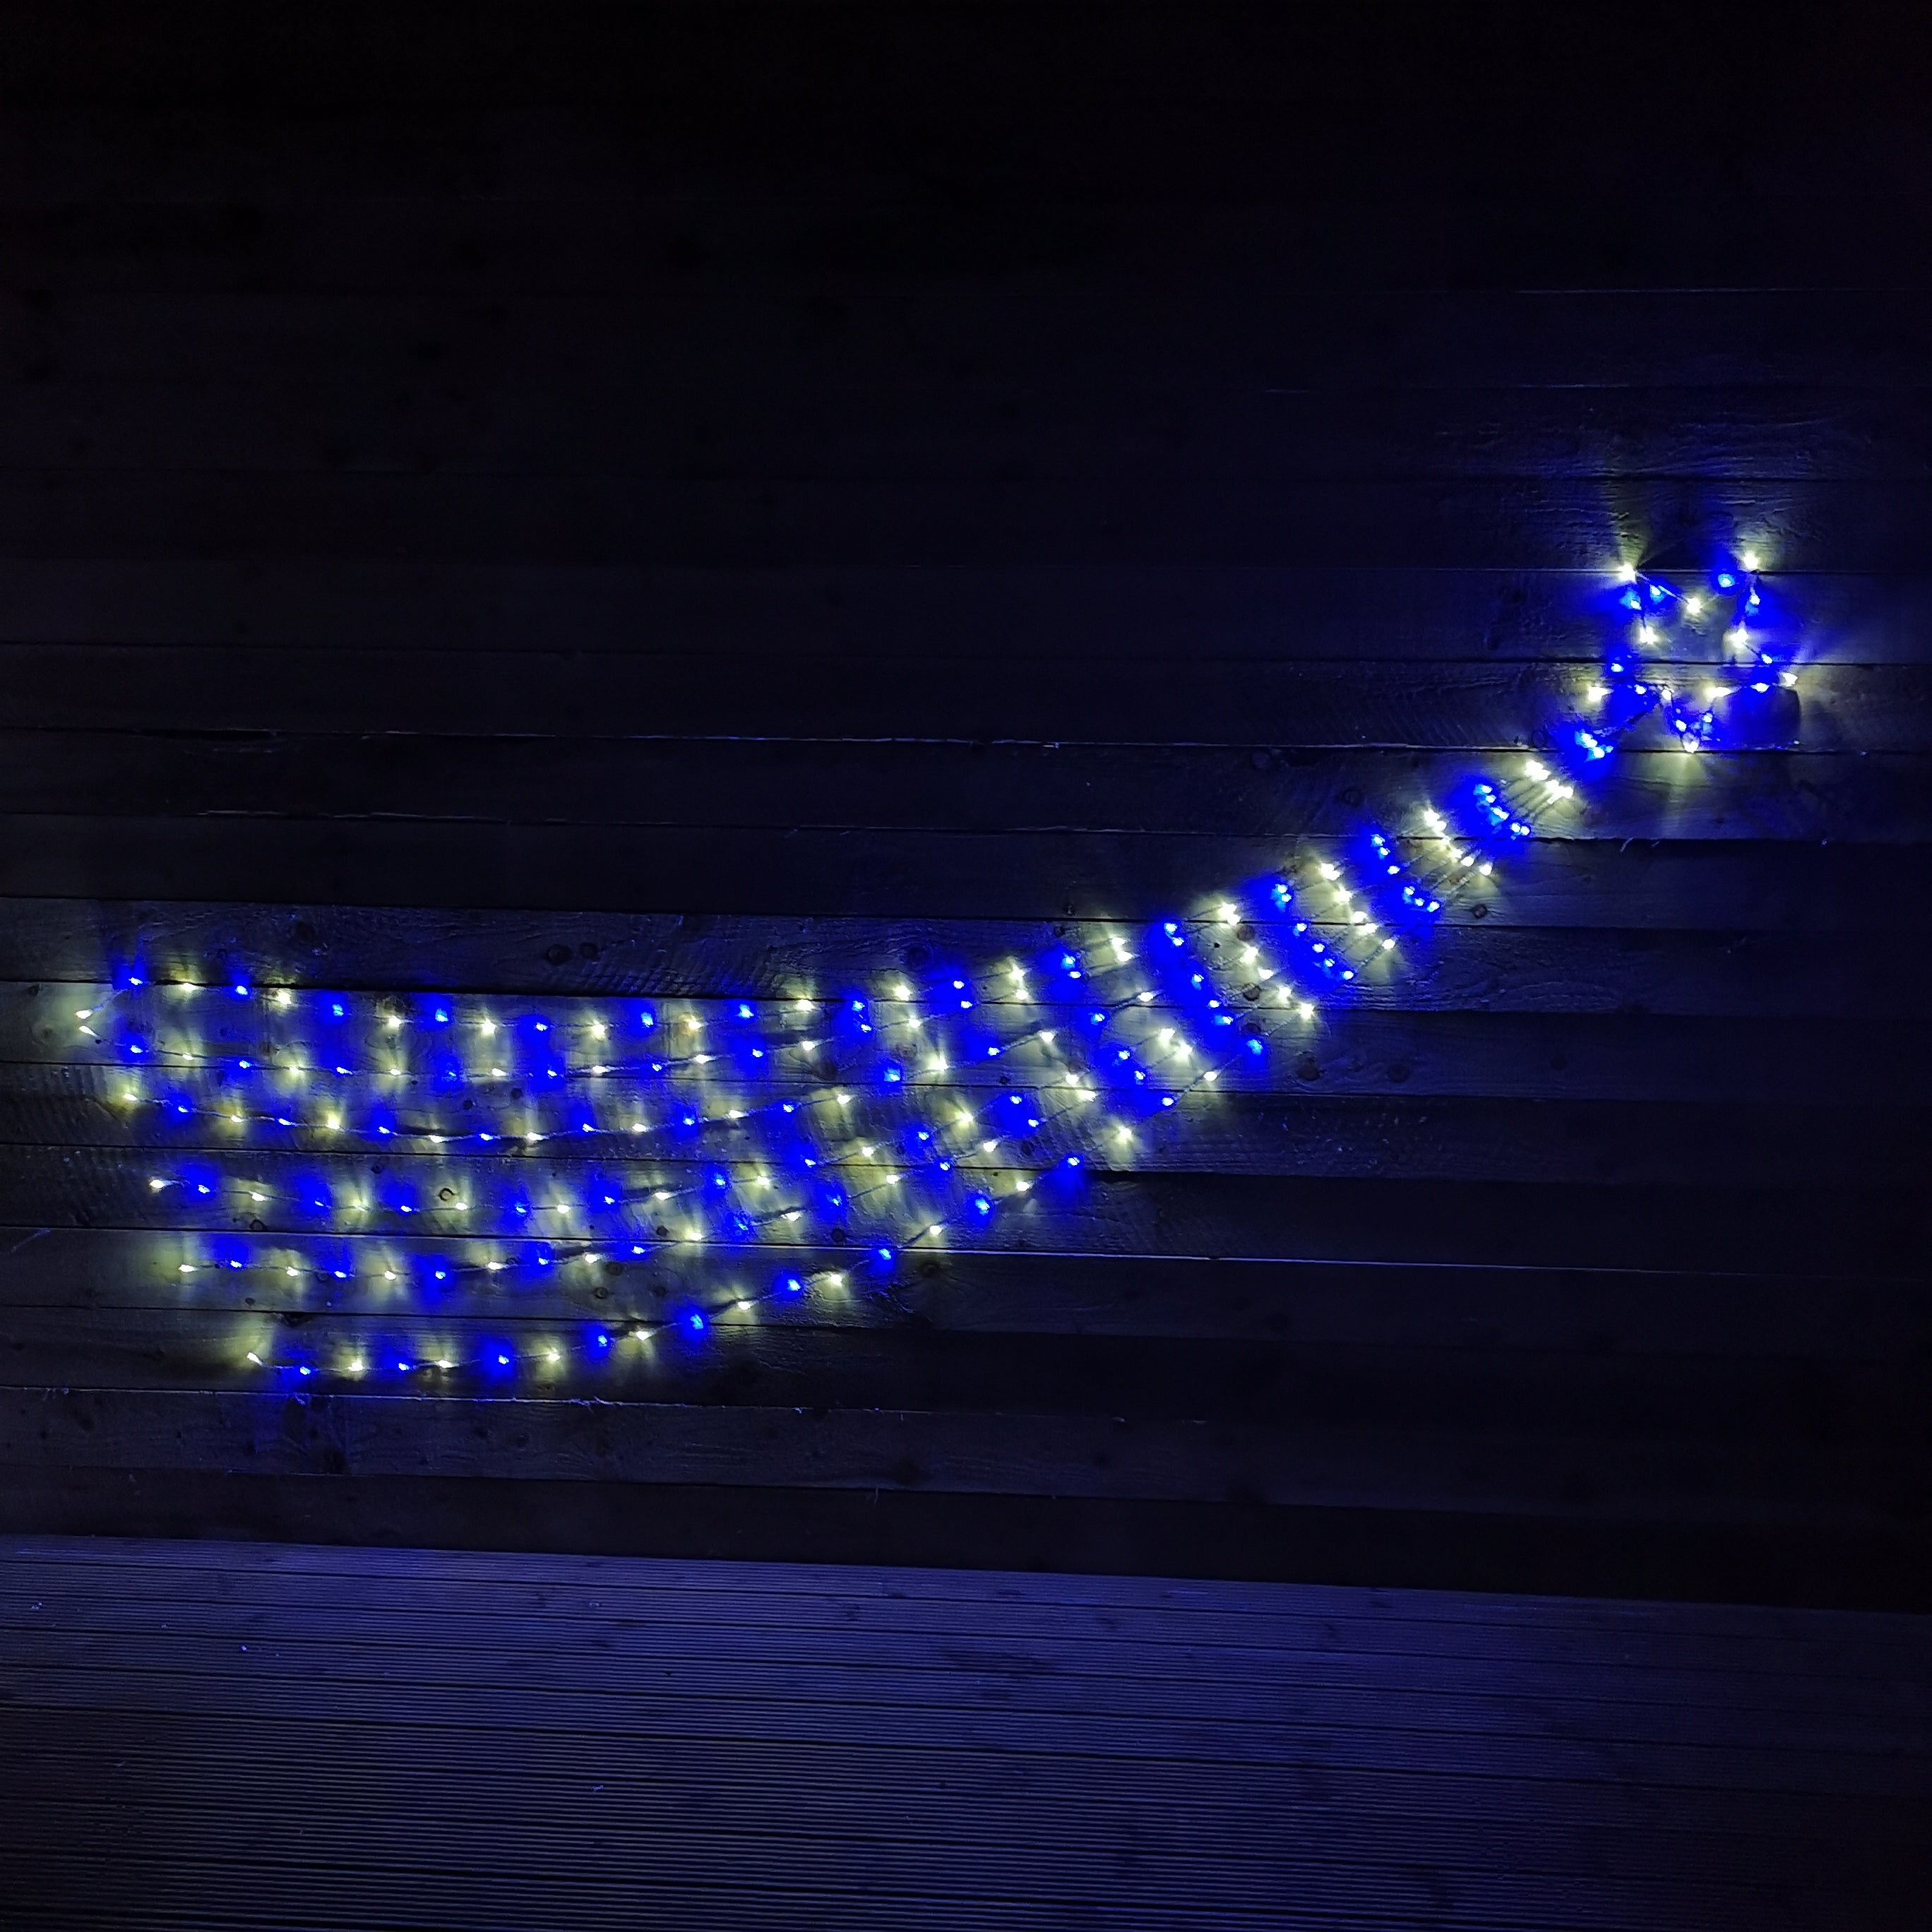 200 LED 3.32m Multifunction Shooting Star Silhouette Christmas Light in Blue & White